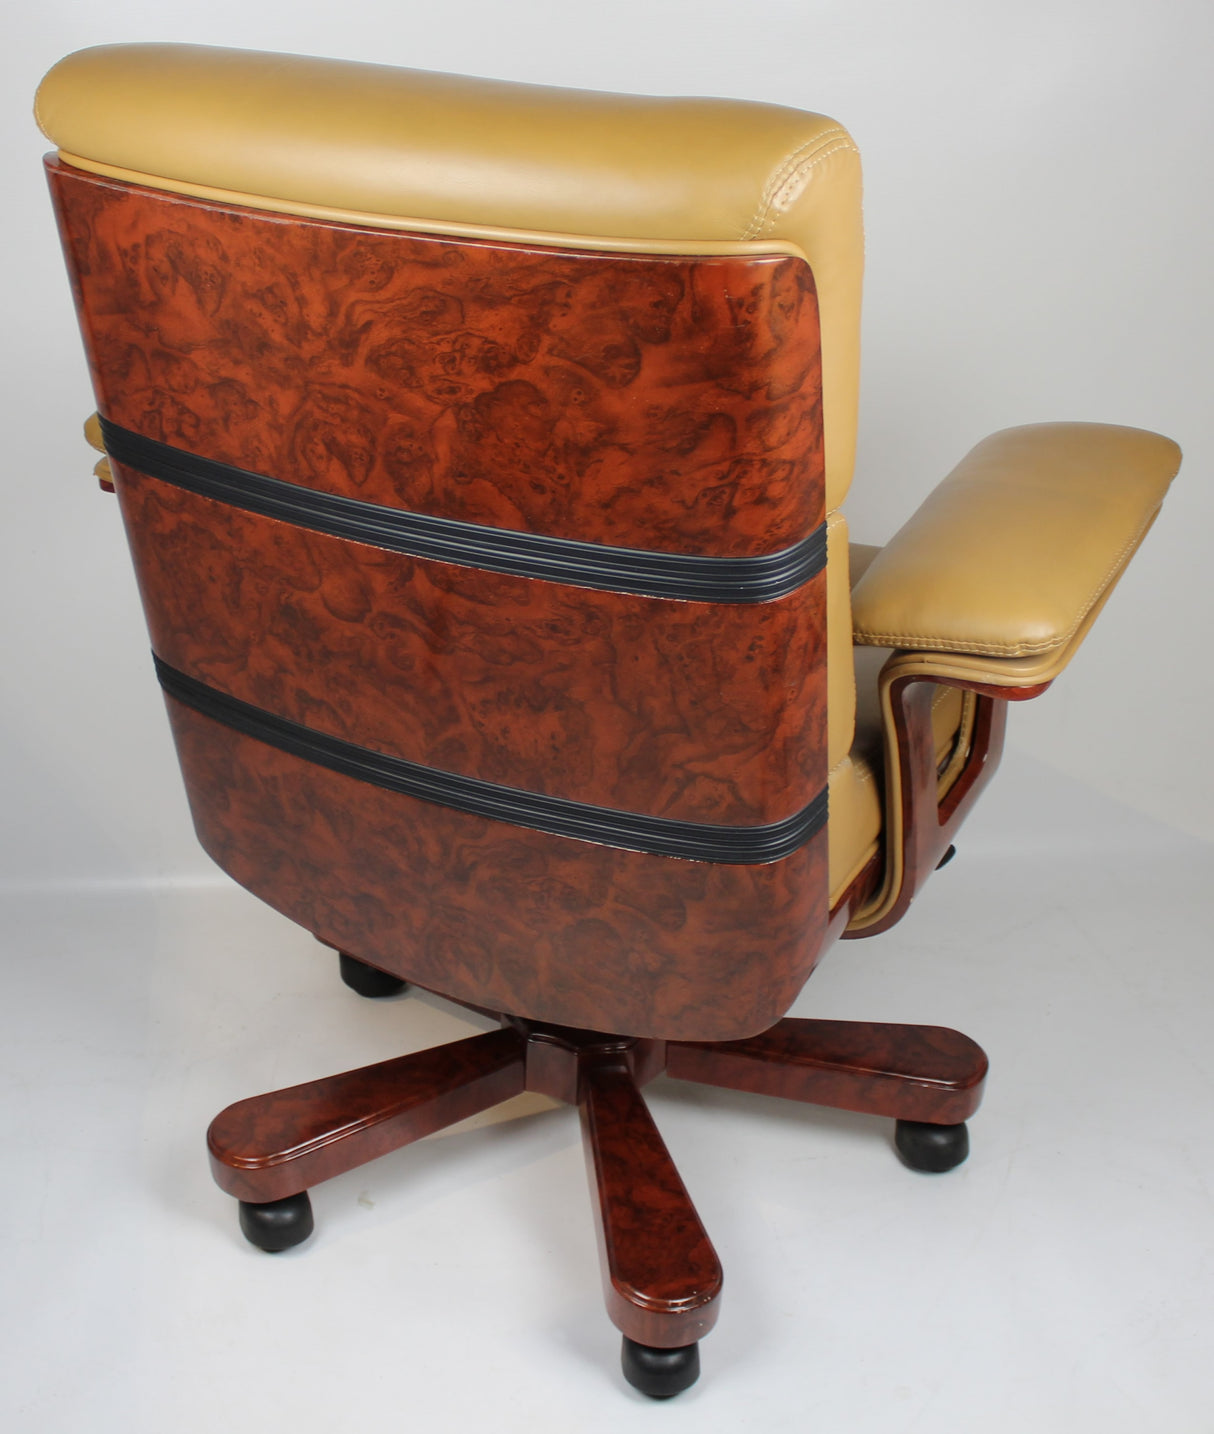 Executive Chair Genuine Leather Beige - DES-B020-BEI